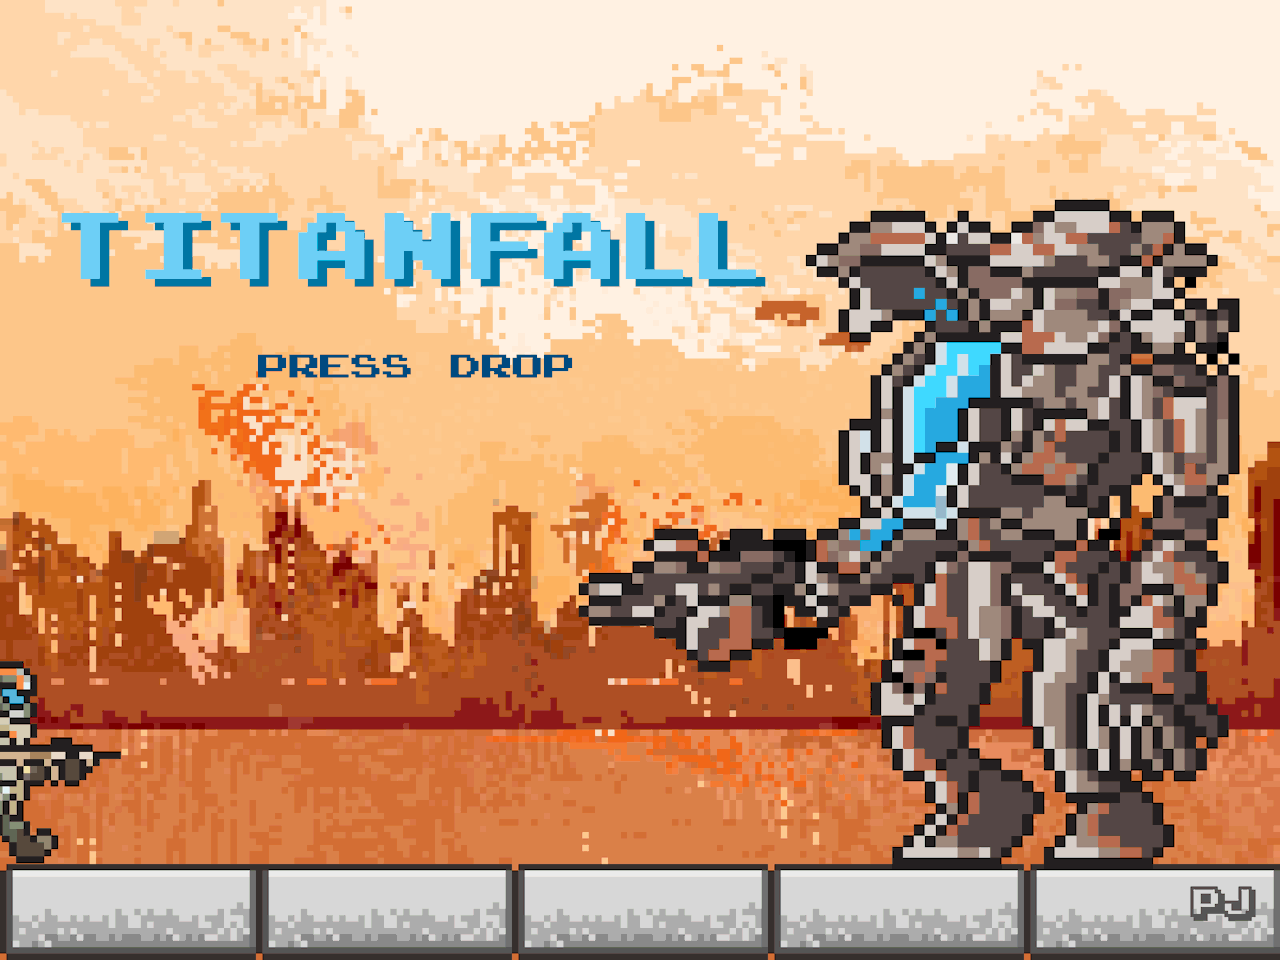 Pixel Jeff — “ TITANFALL” NES version